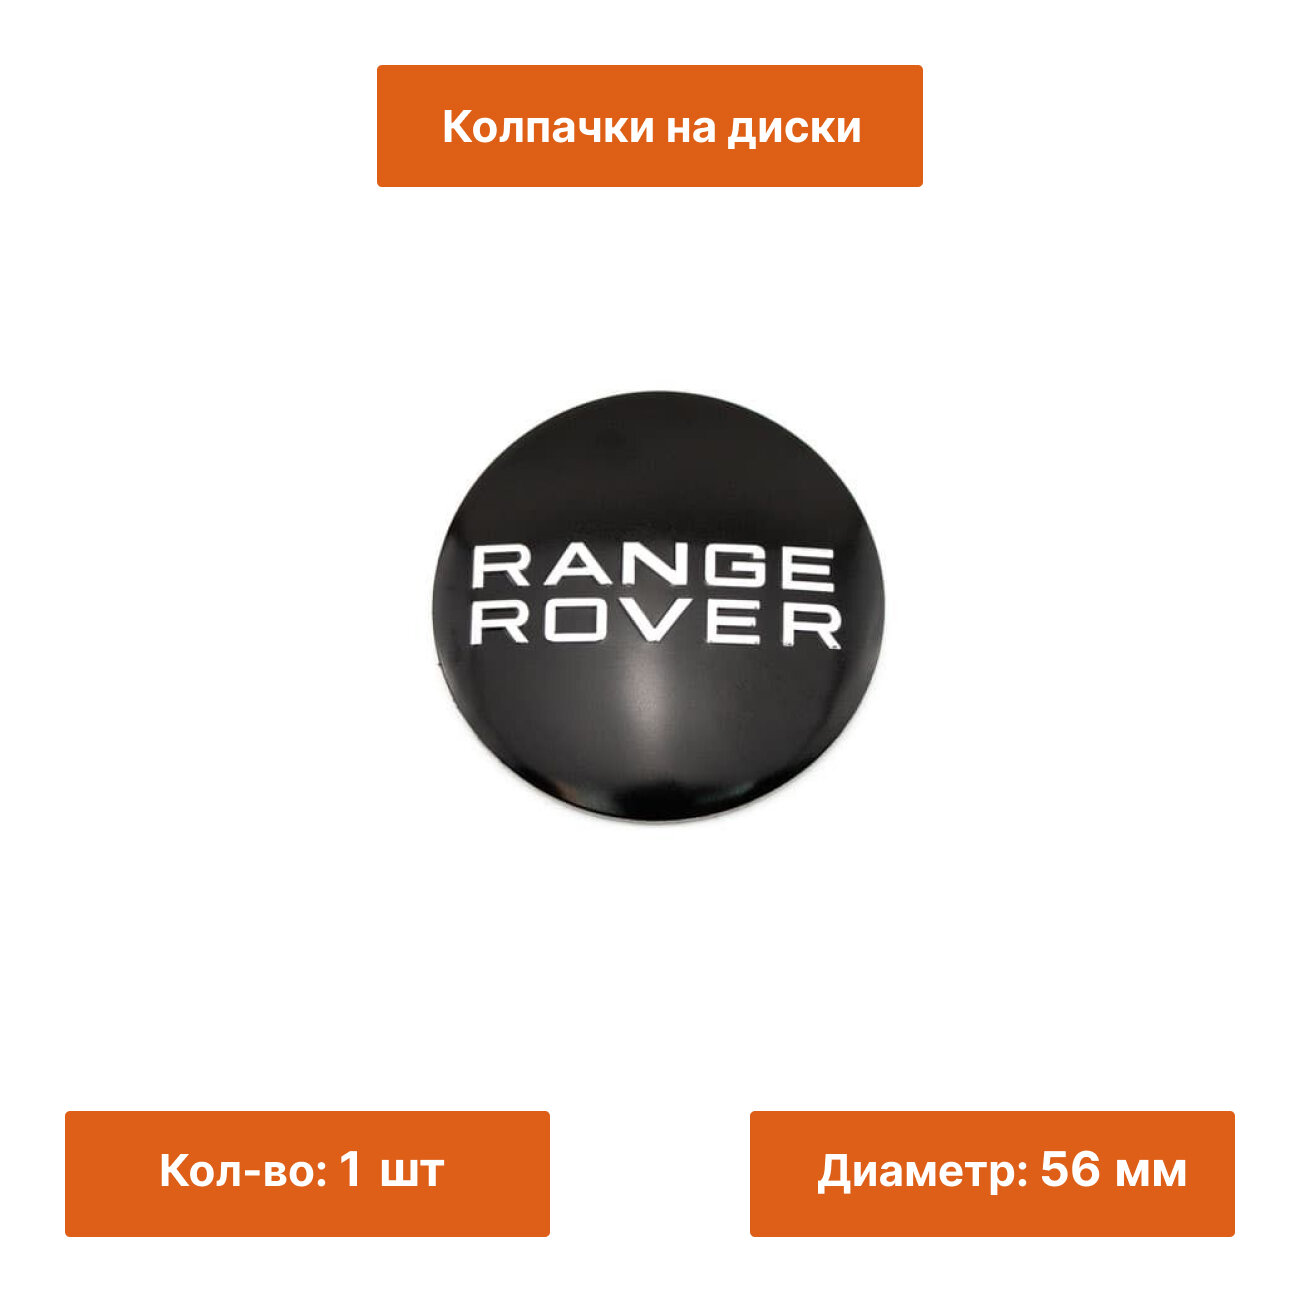 Наклейка на диск для Range Rover 56 мм